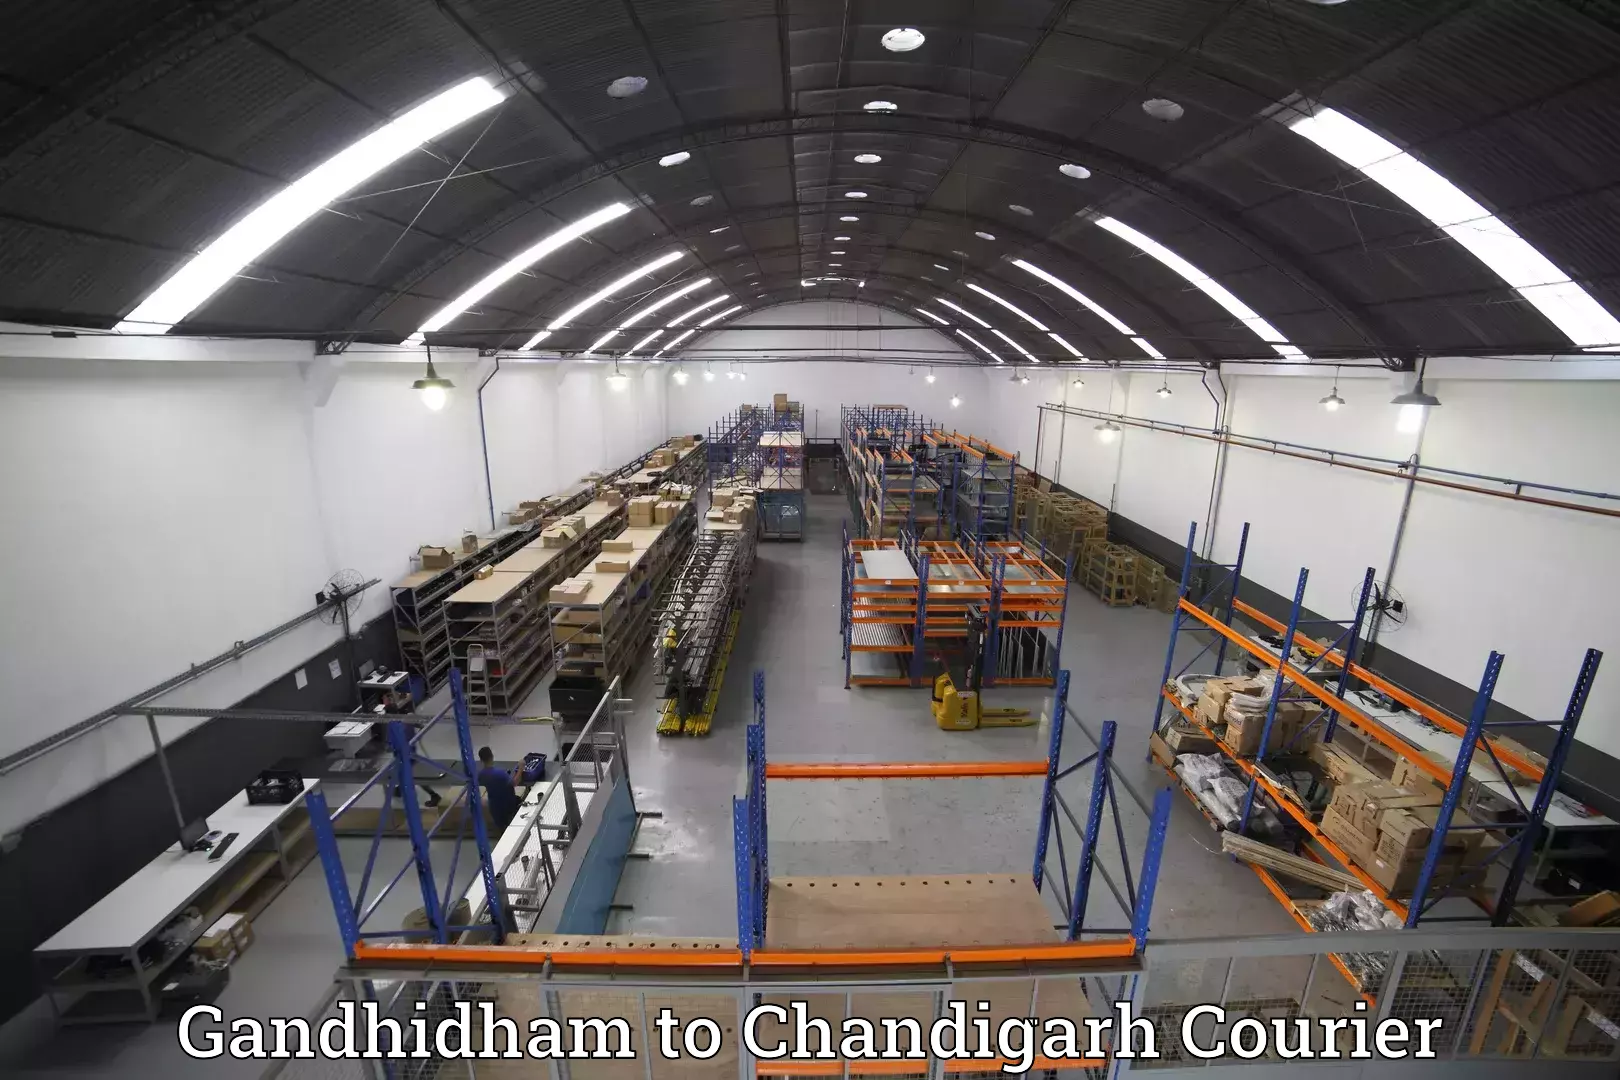 Luggage delivery network Gandhidham to Chandigarh